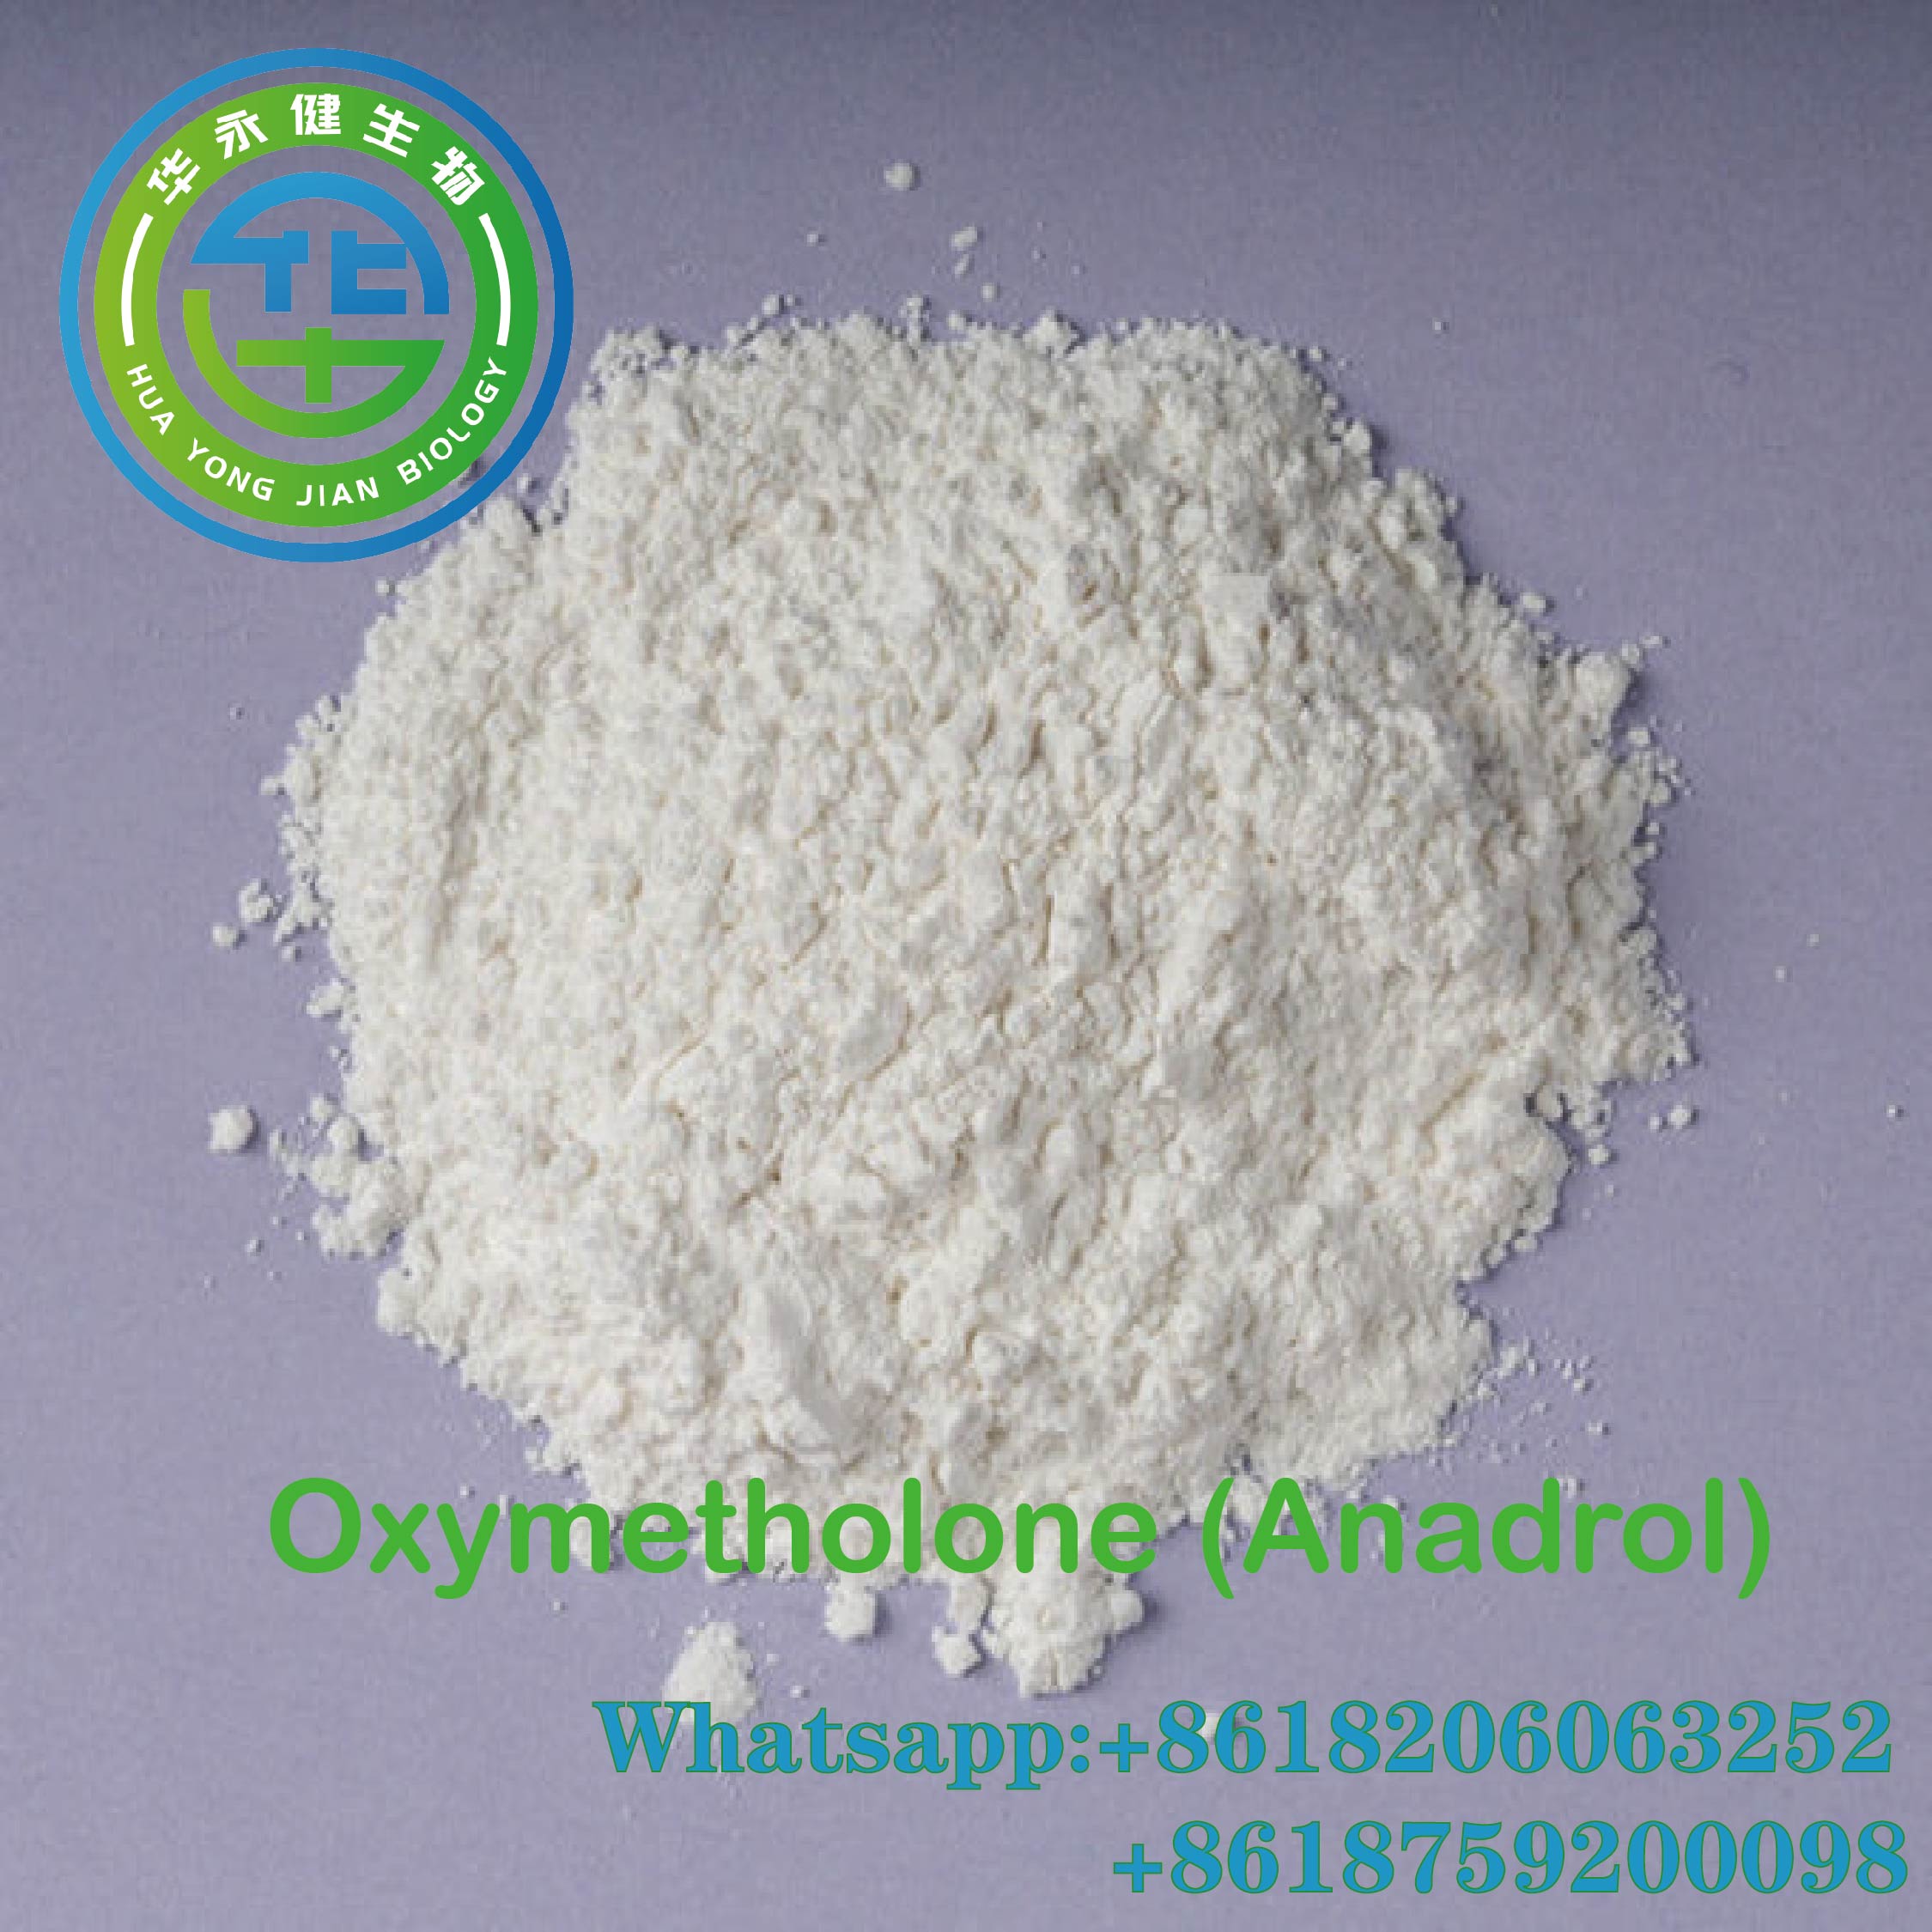 Gidawat sa Bitcoin Paypal ang Steroid Raw Powders 99% Purity Oxymetholone (Anadrol) Powder CAS 434-07-1 Featured Image